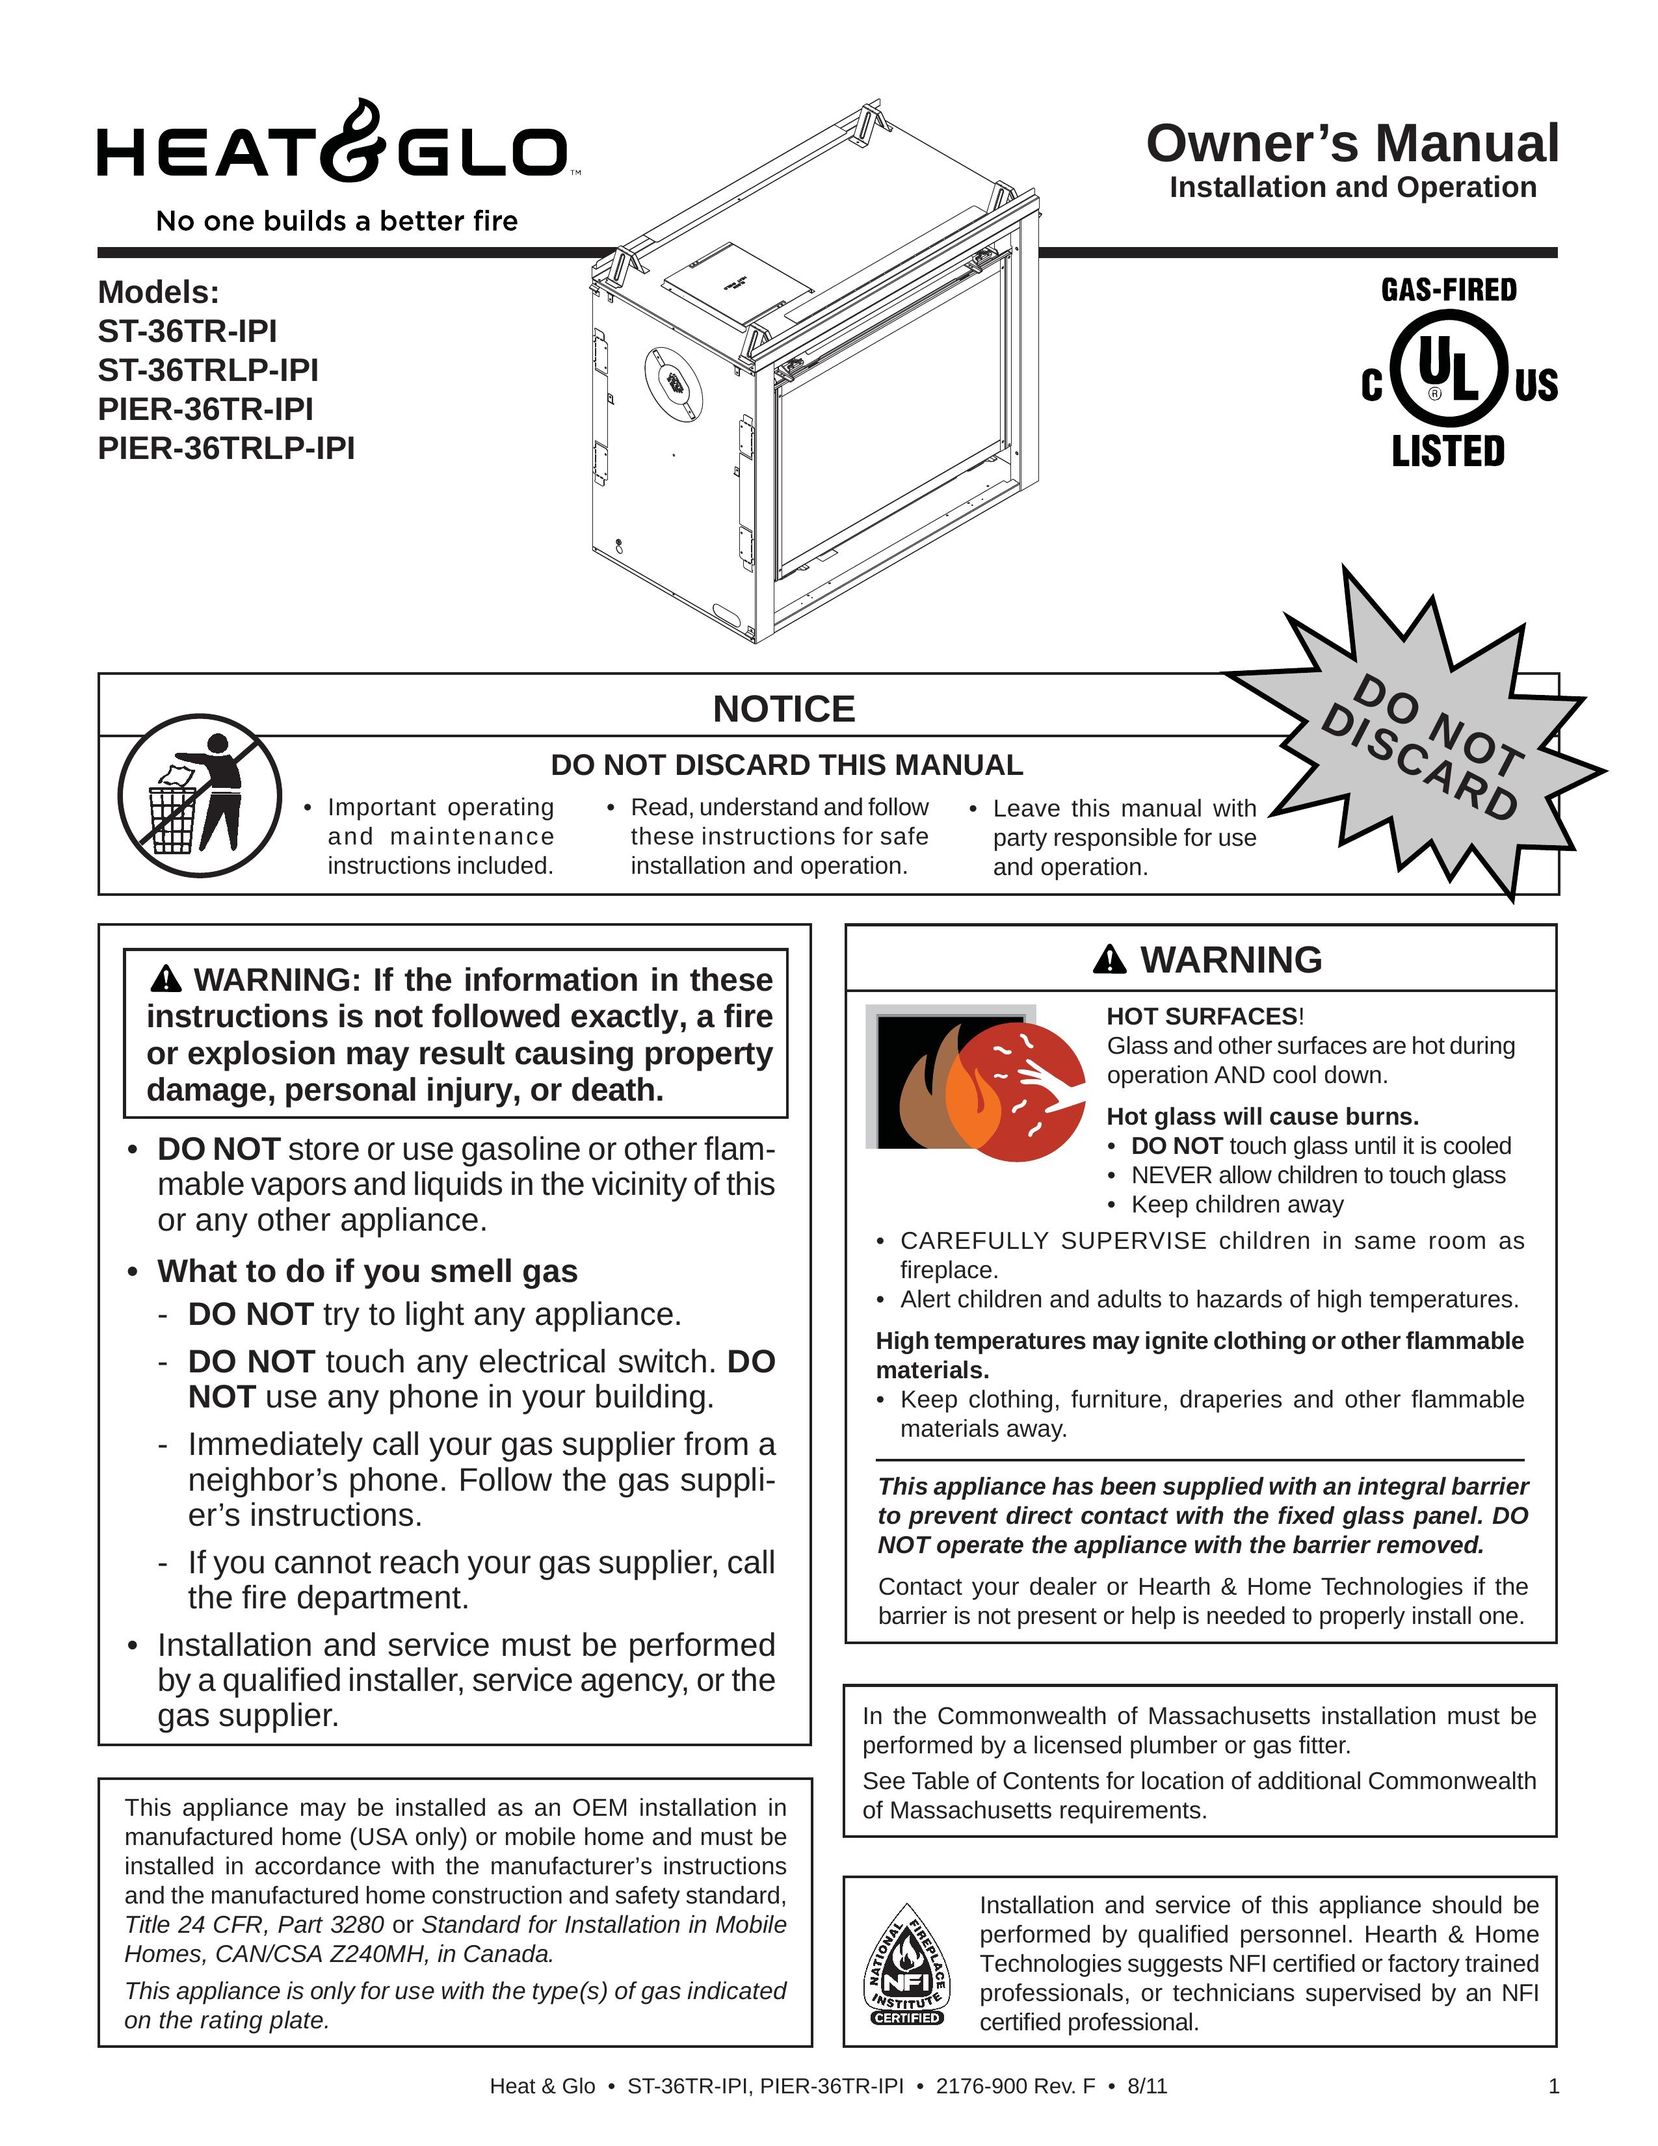 Heat & Glo LifeStyle PIER-36TR-IPI Burner User Manual